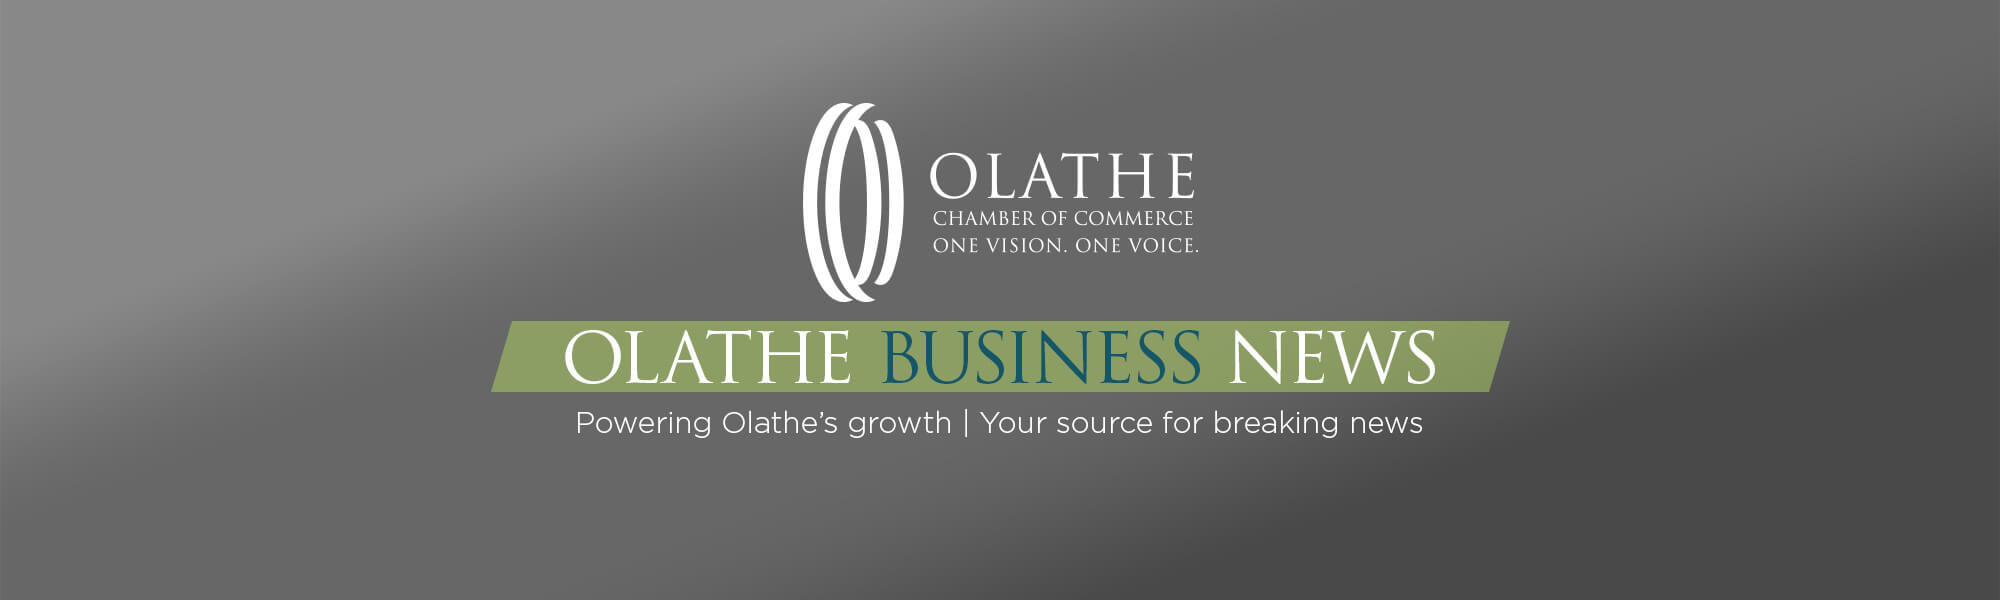 Olathe Business Blog Header 240628 01